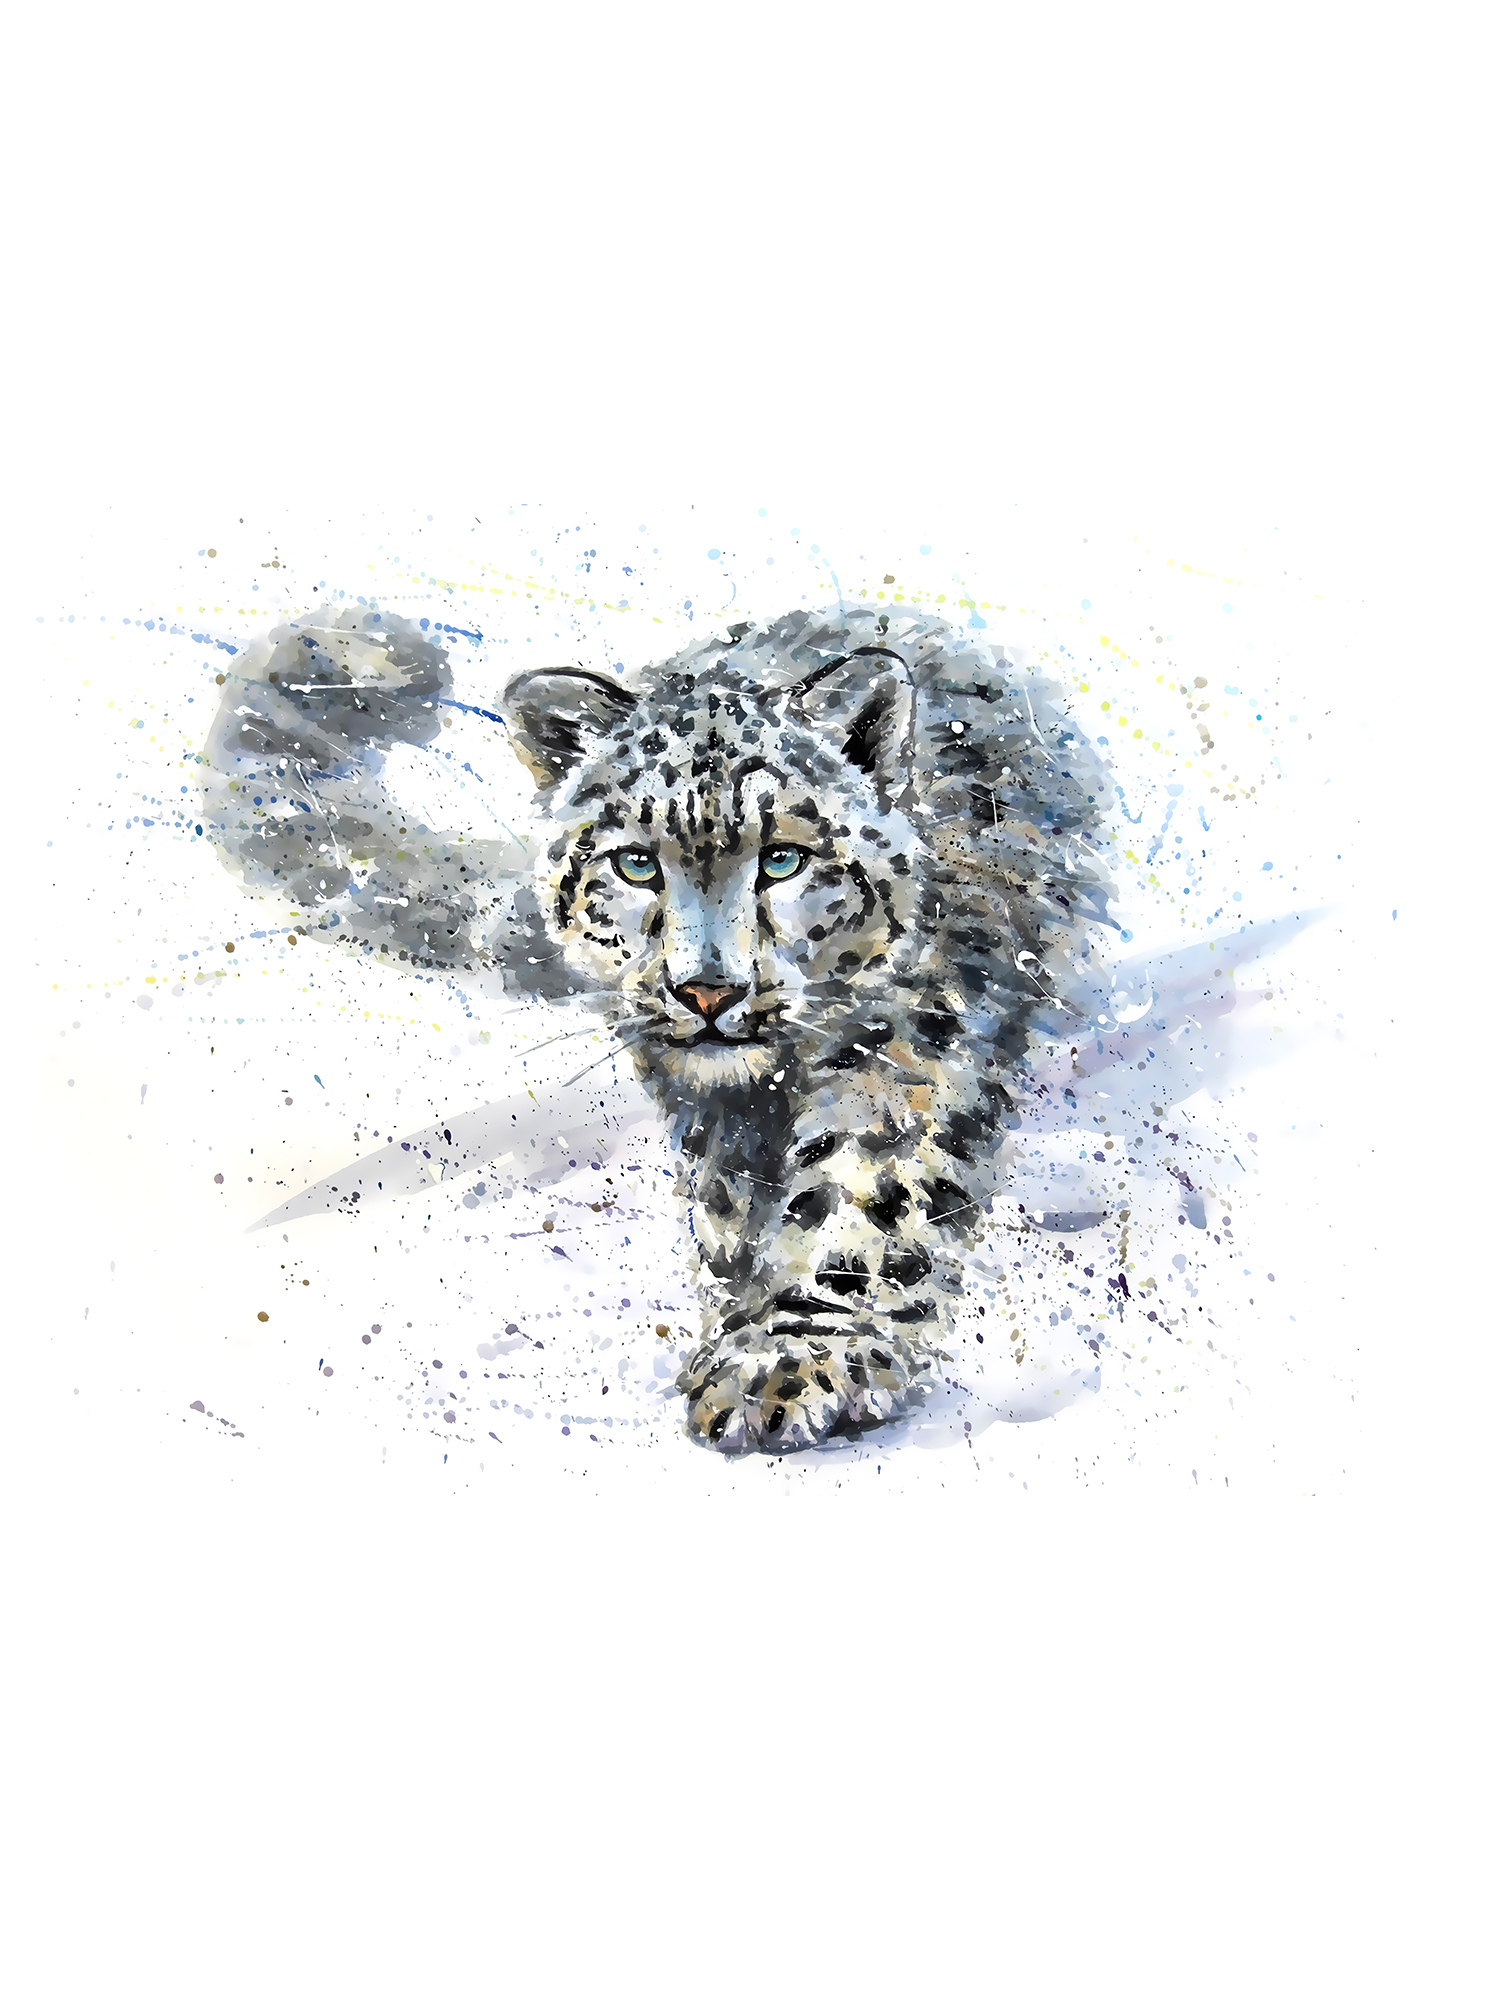 Амурский леопард на досках в снегу картинка на заставку